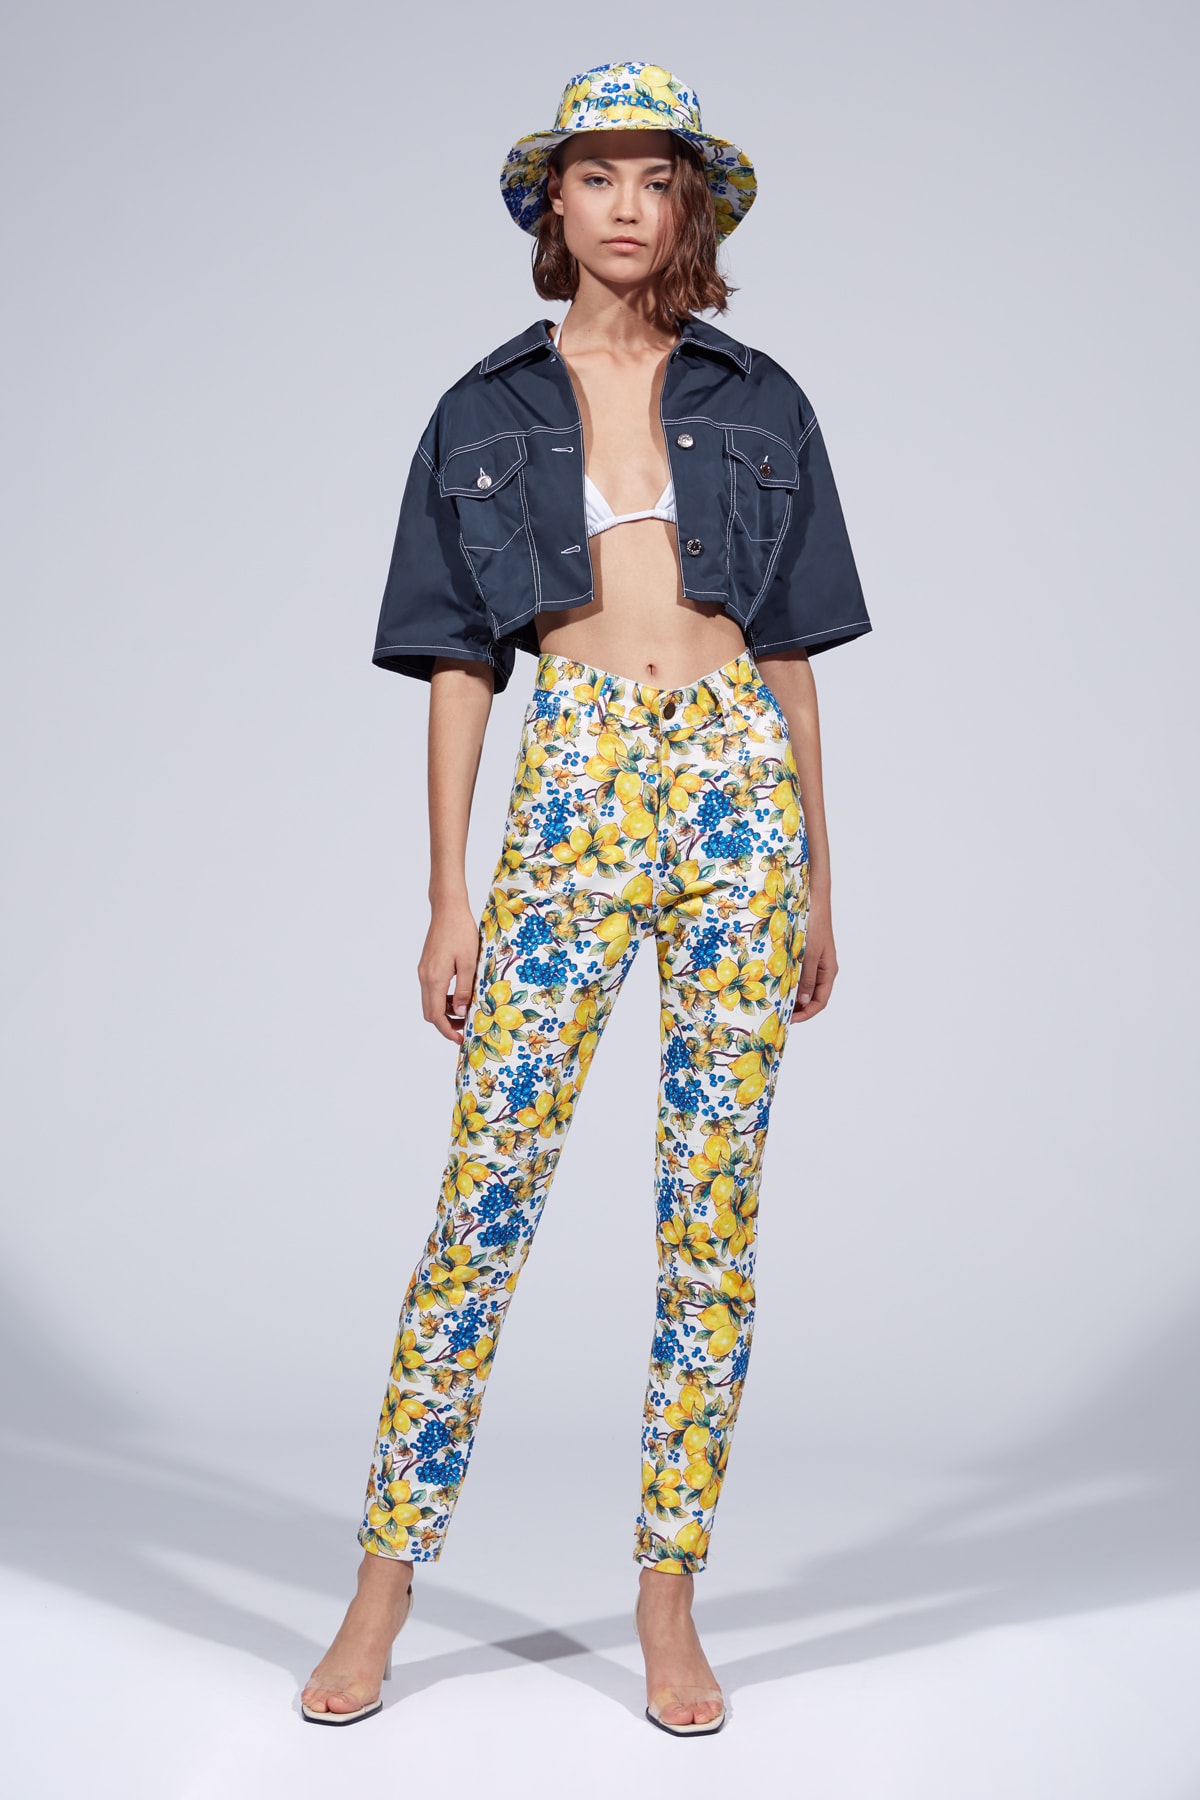 Fiorucci Spring Summer 2019 Collection Lookbook Floral Pants Bucket Hat Yellow Denim Jacket Blue